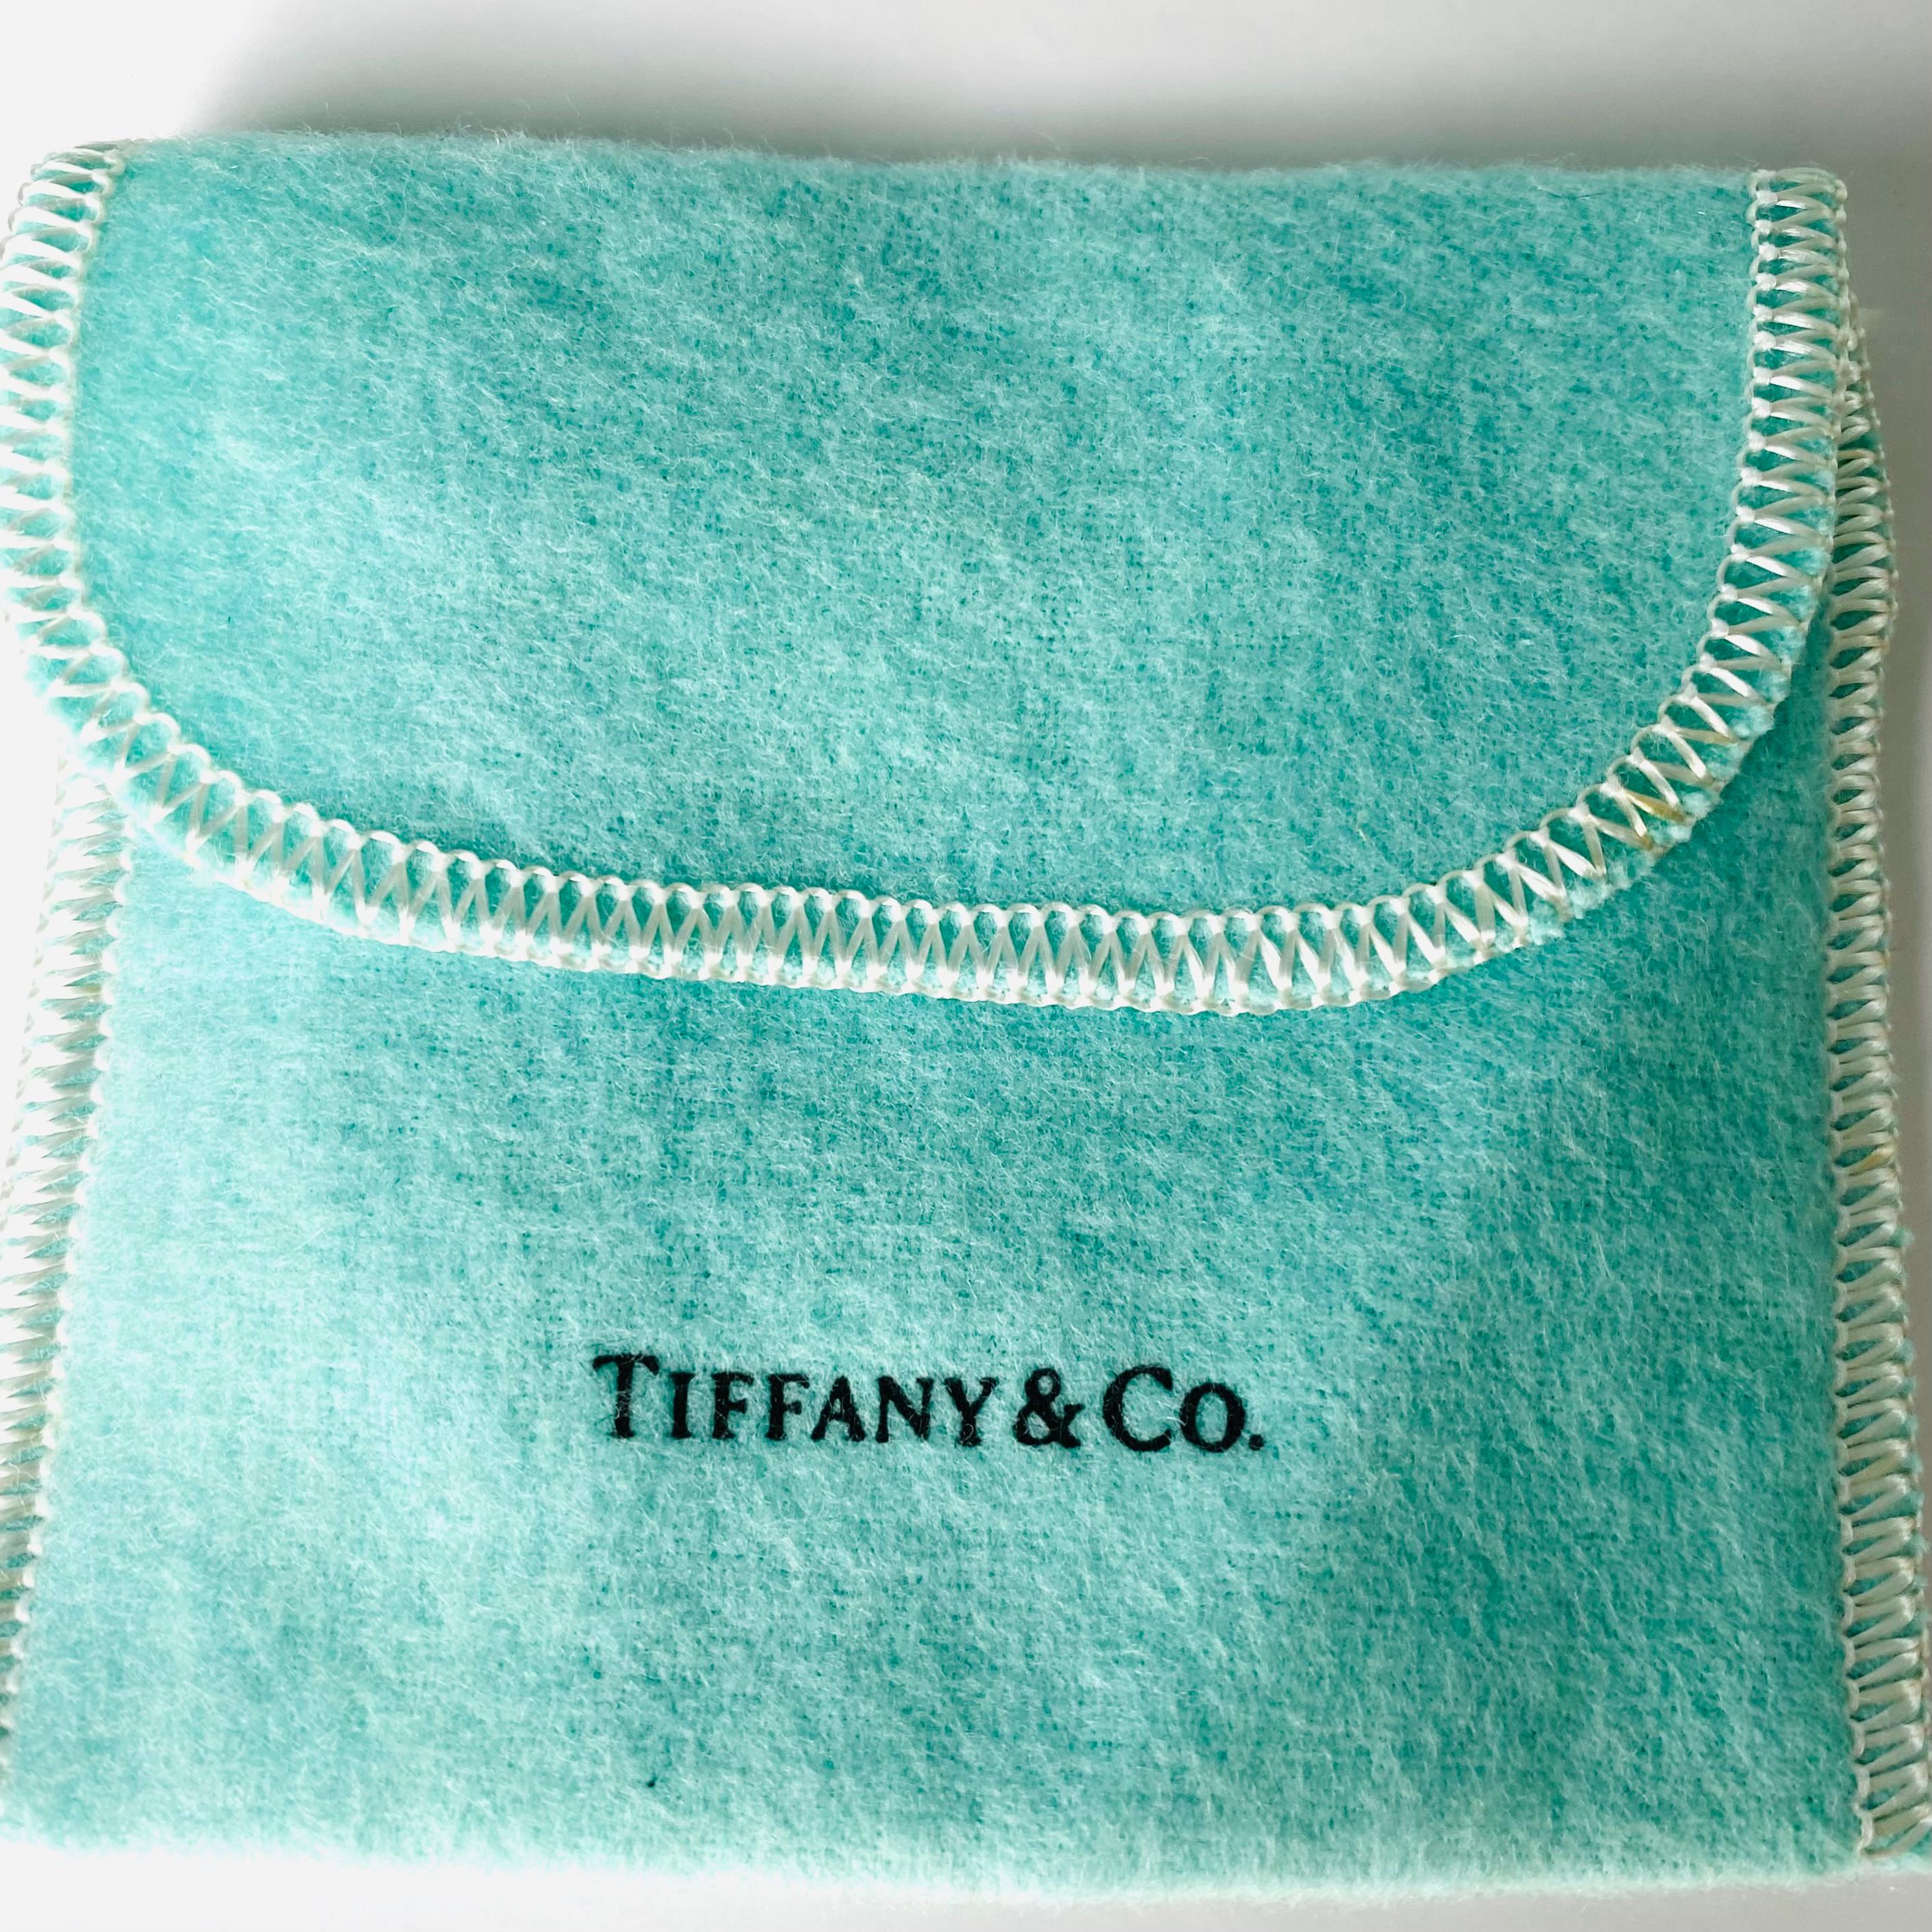 Contemporary Elsa Peretti for Tiffany Co Vintage Silver Bean Cufflinks 0.80 x 0.55 Inches